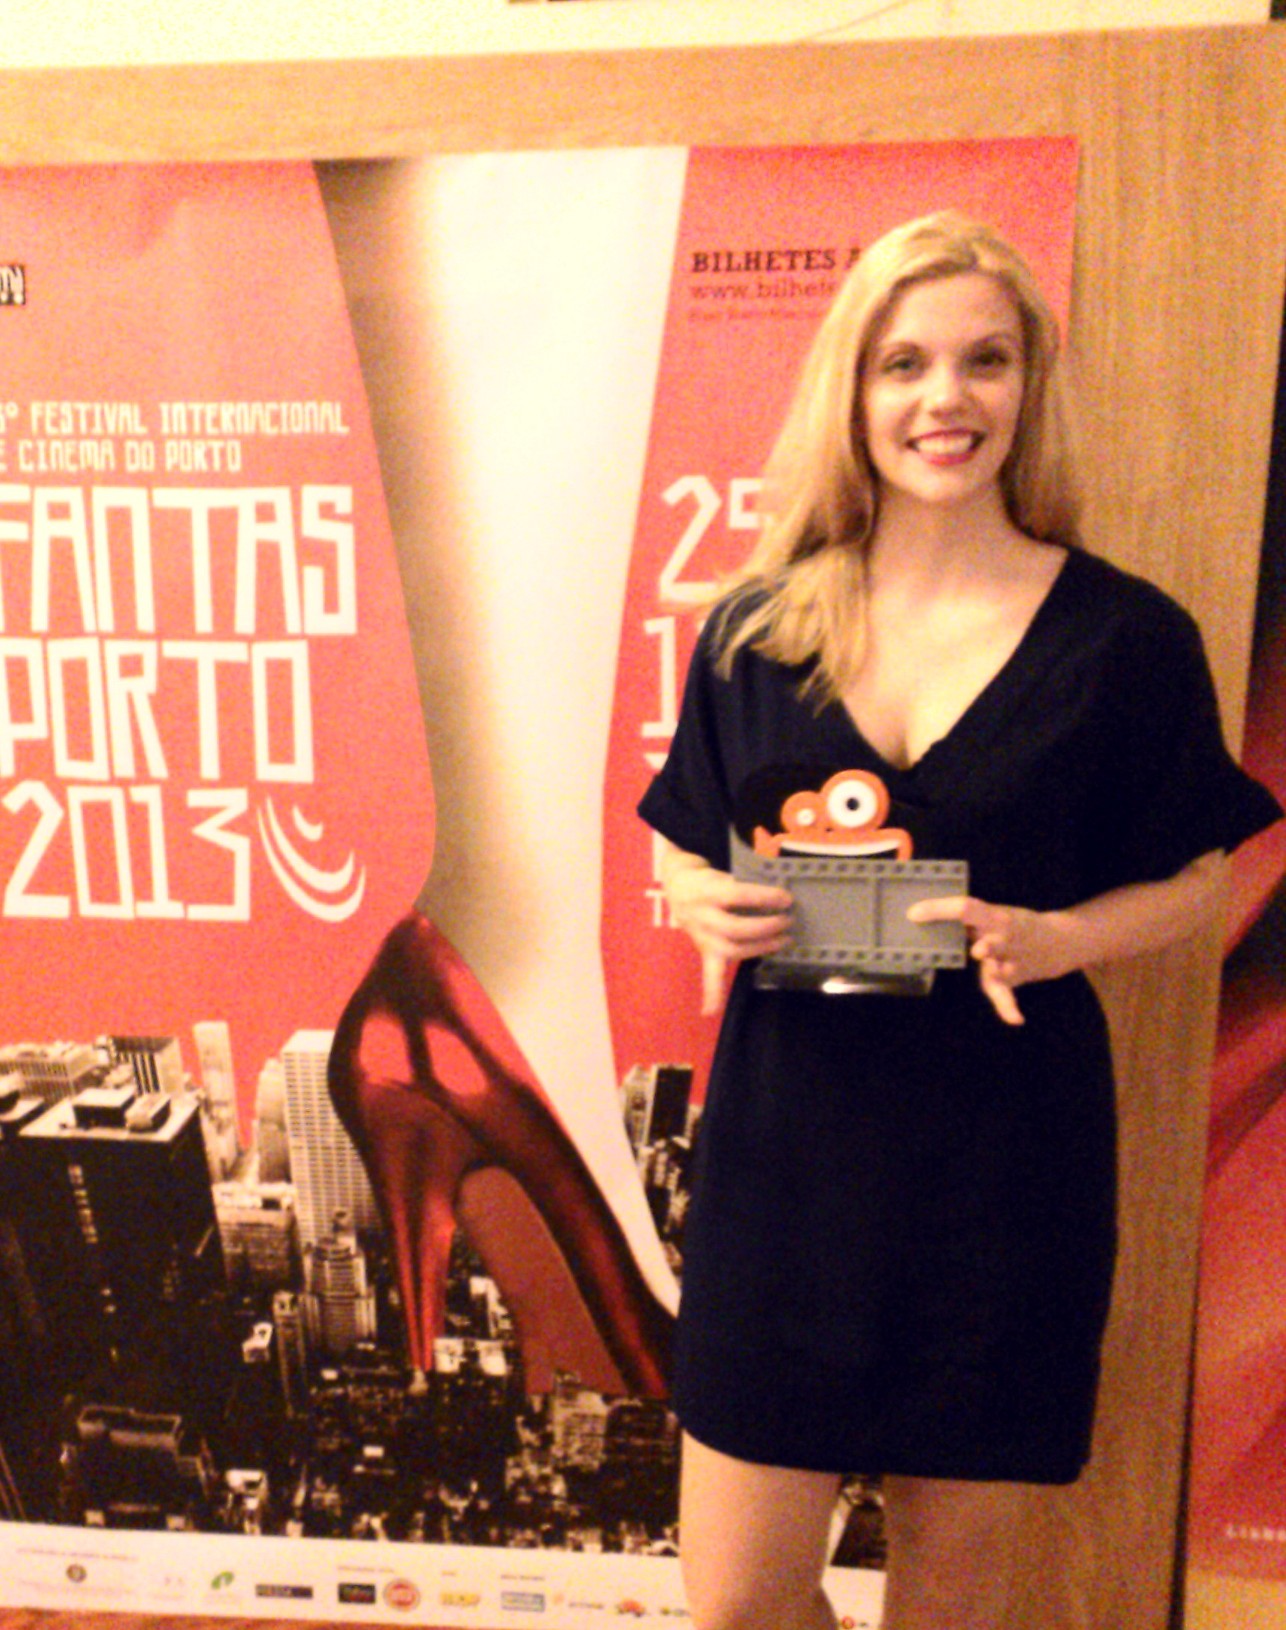 Silje Reinåmo/Thale winning the Audience Award at Fantasporto 2013